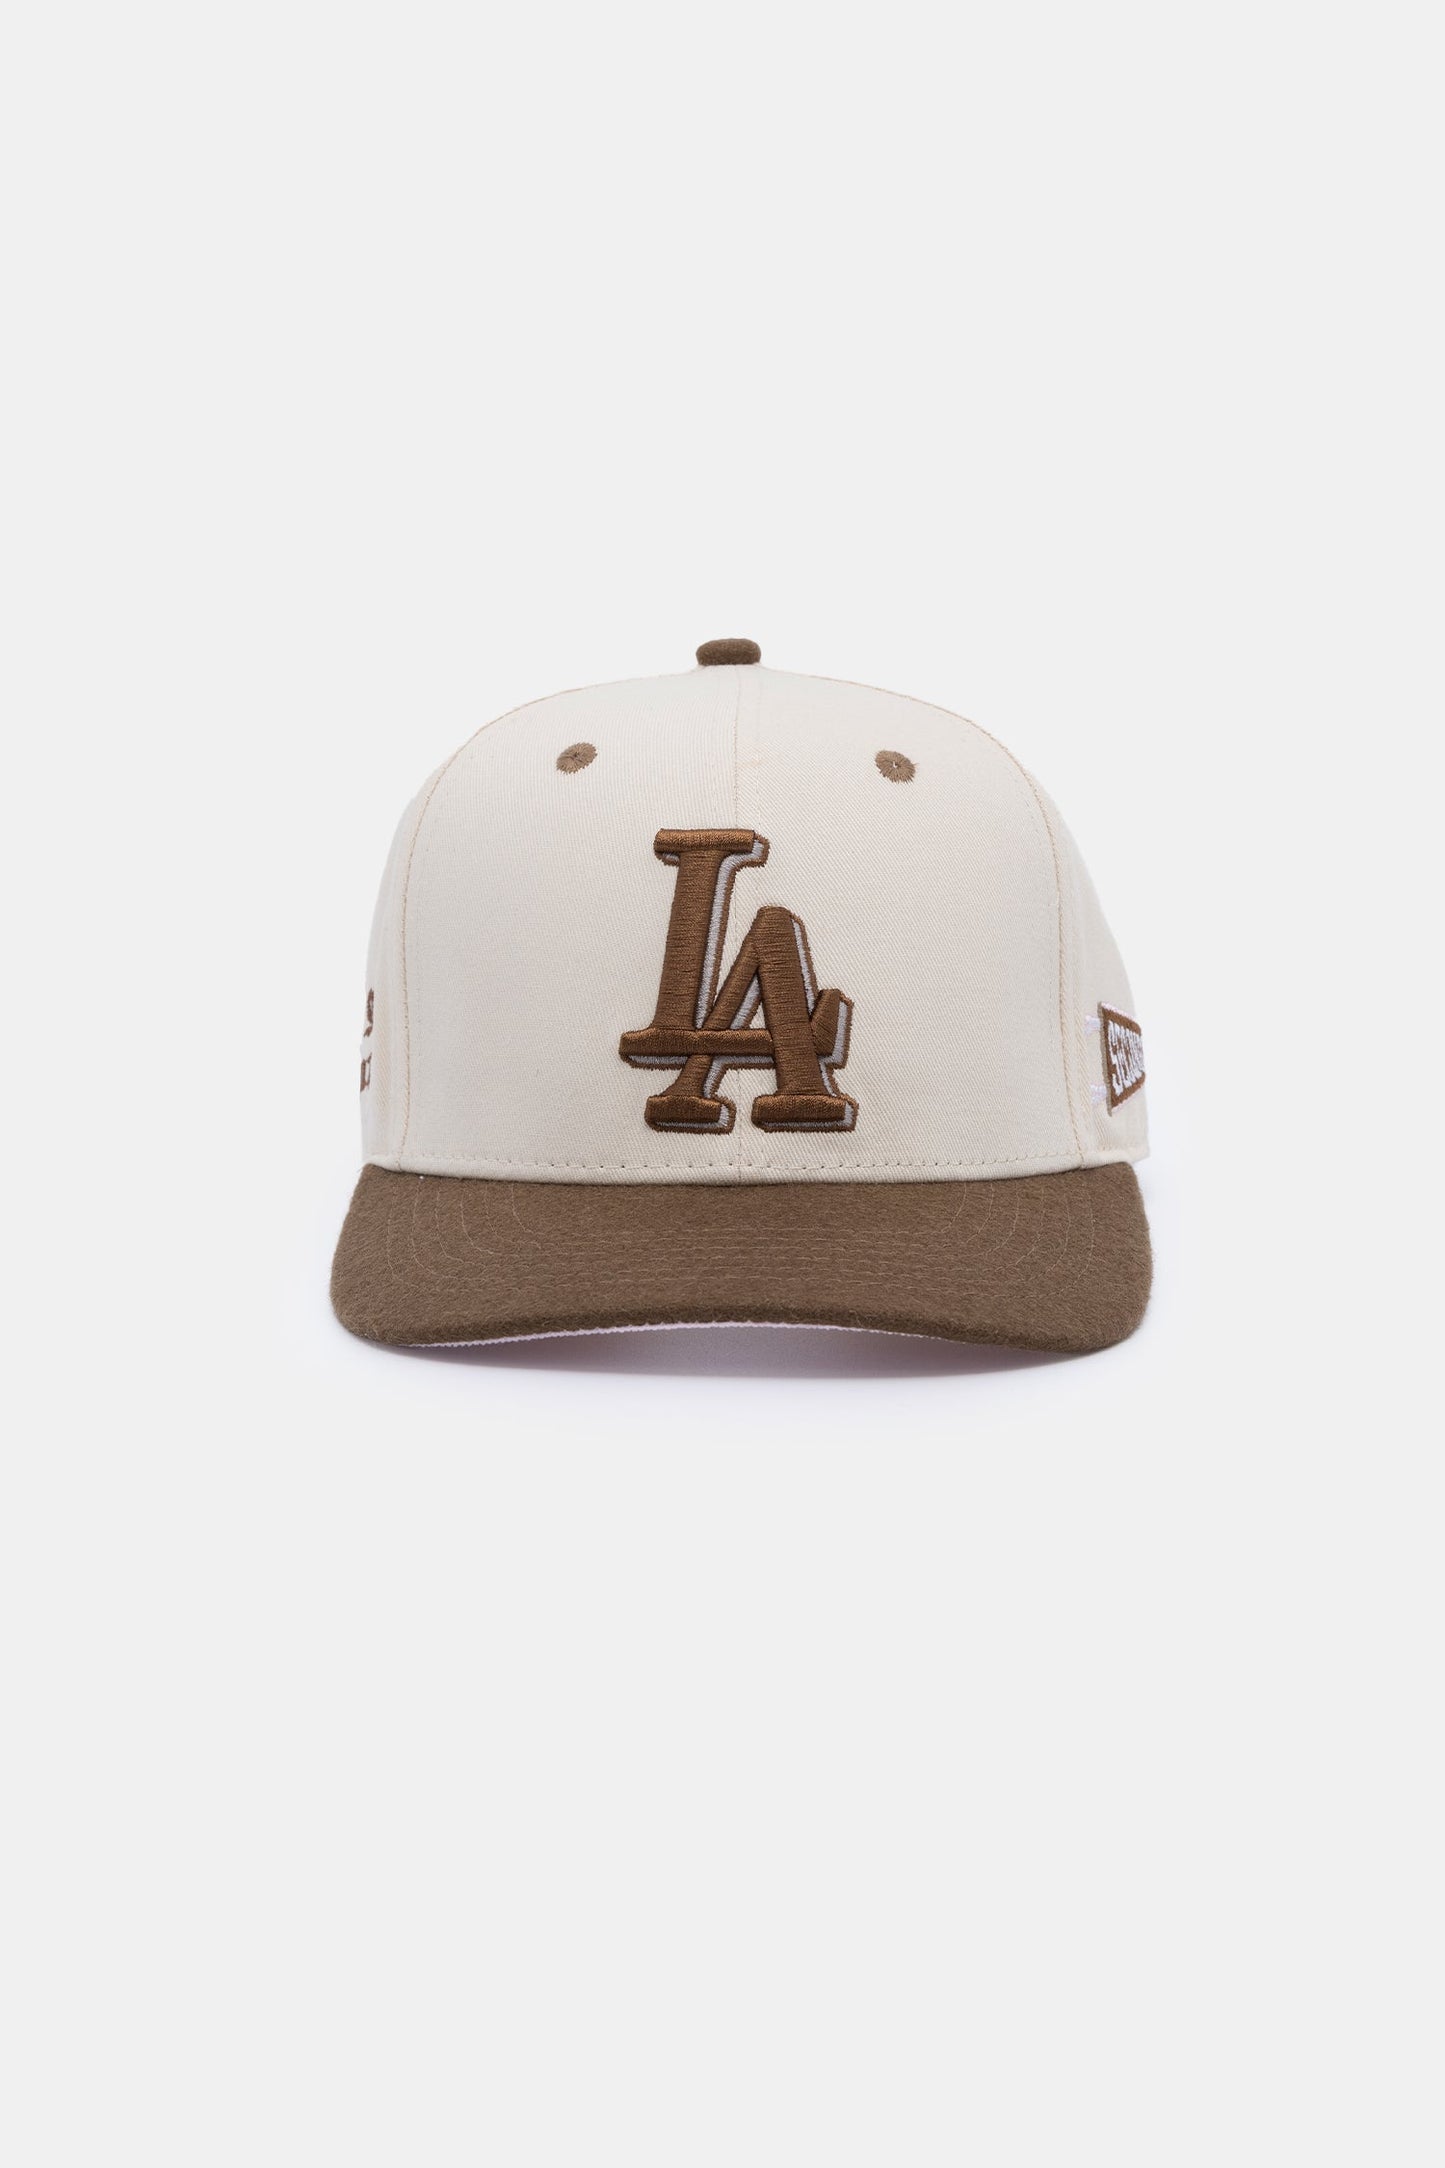 LA - 3D BLOCK HAT (NEAPOLITAN)